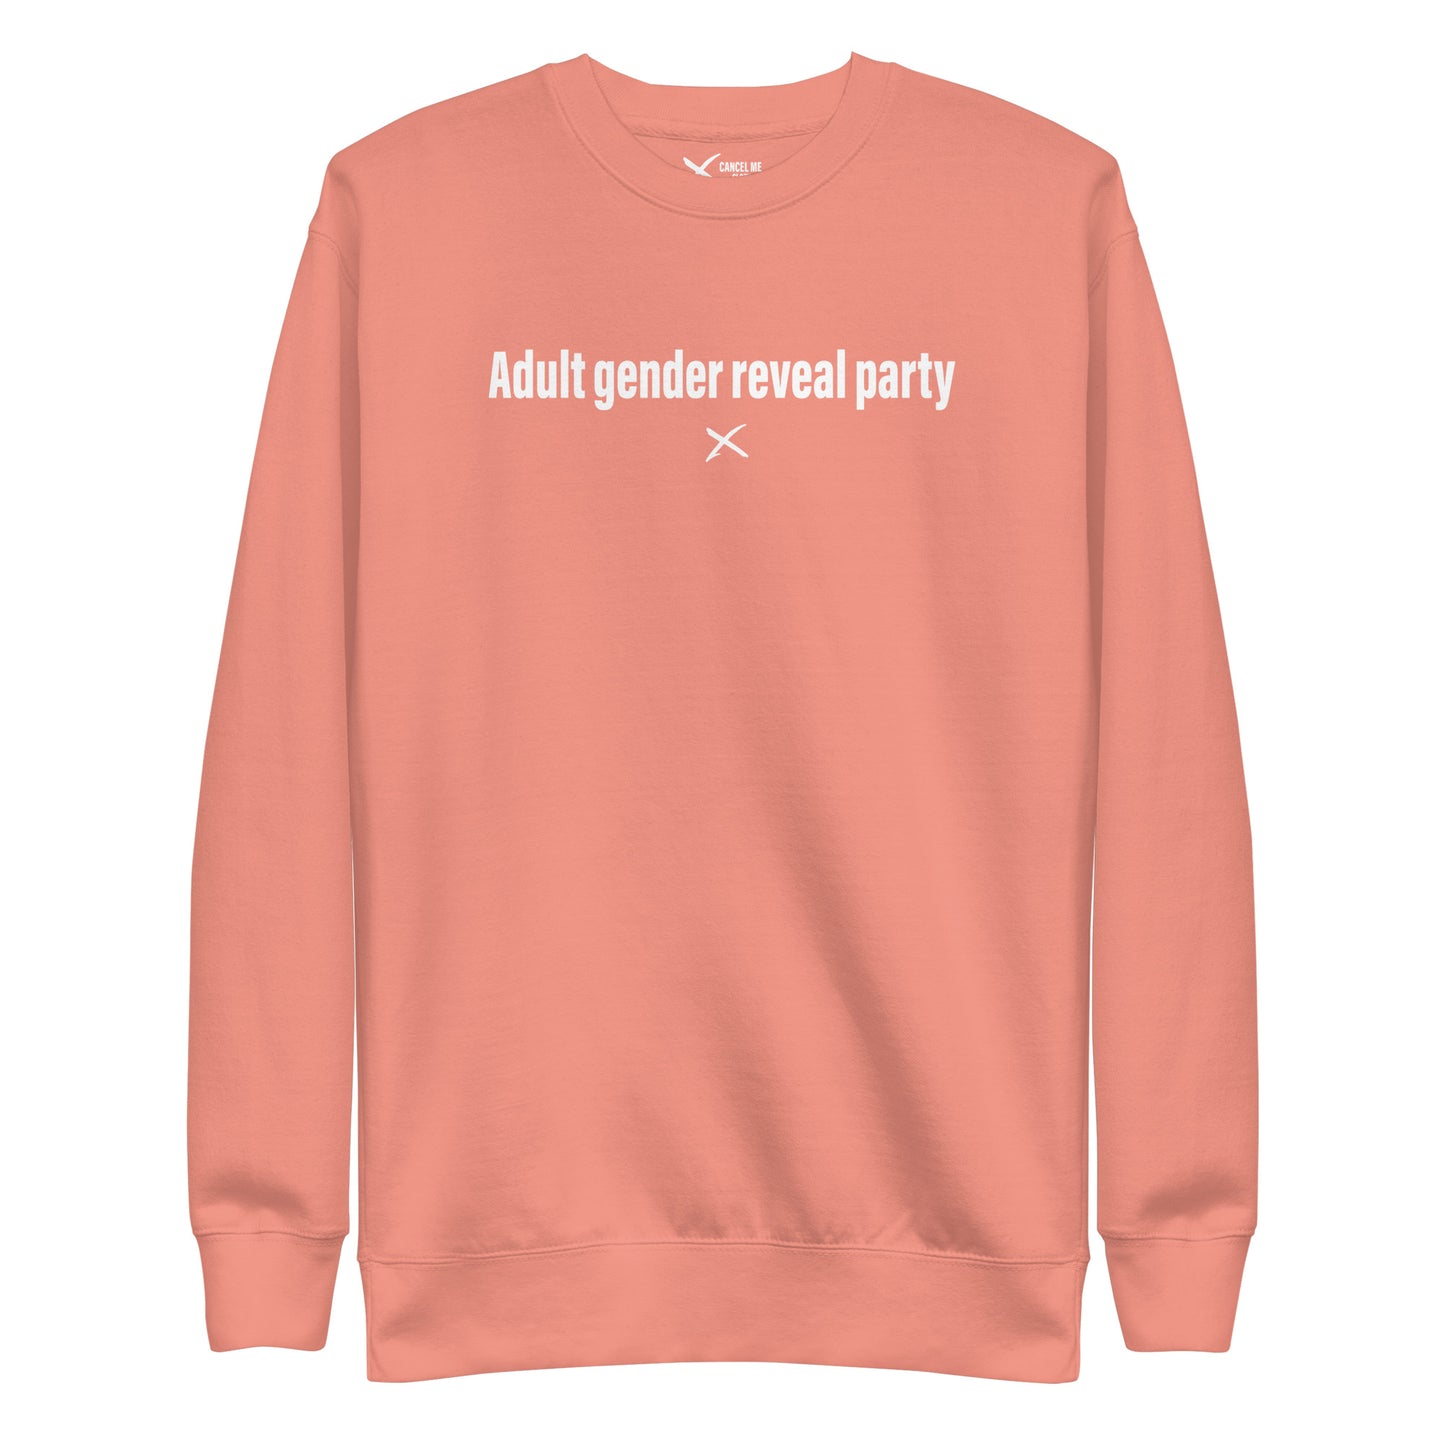 Adult gender reveal party - Sweatshirt